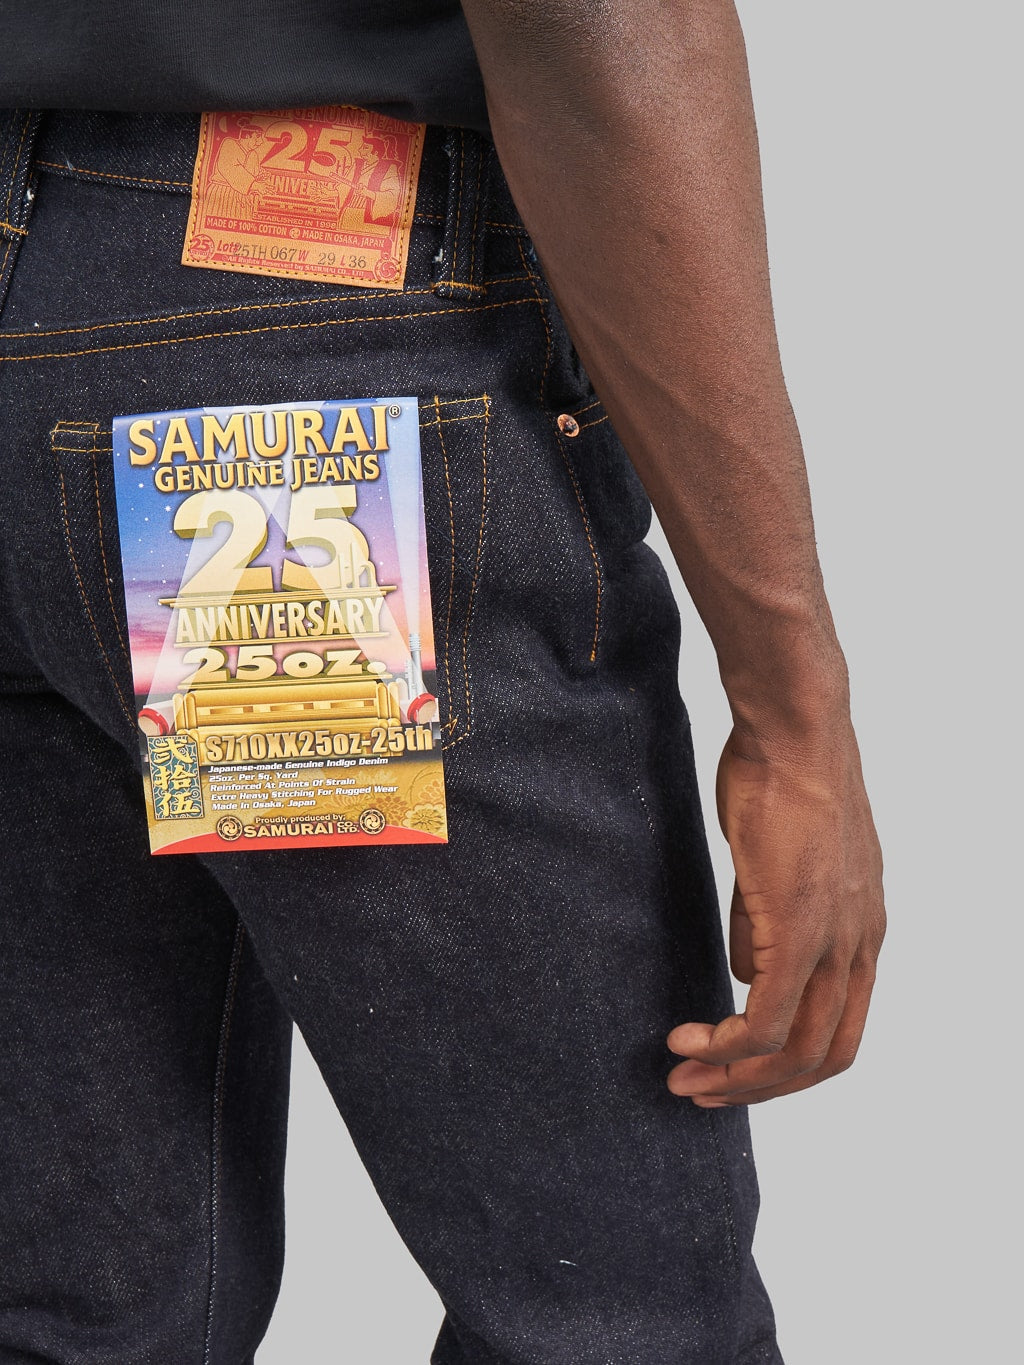 samurai jeans s710xx 25oz 25th anniversary selvedge jeans pocket flasher